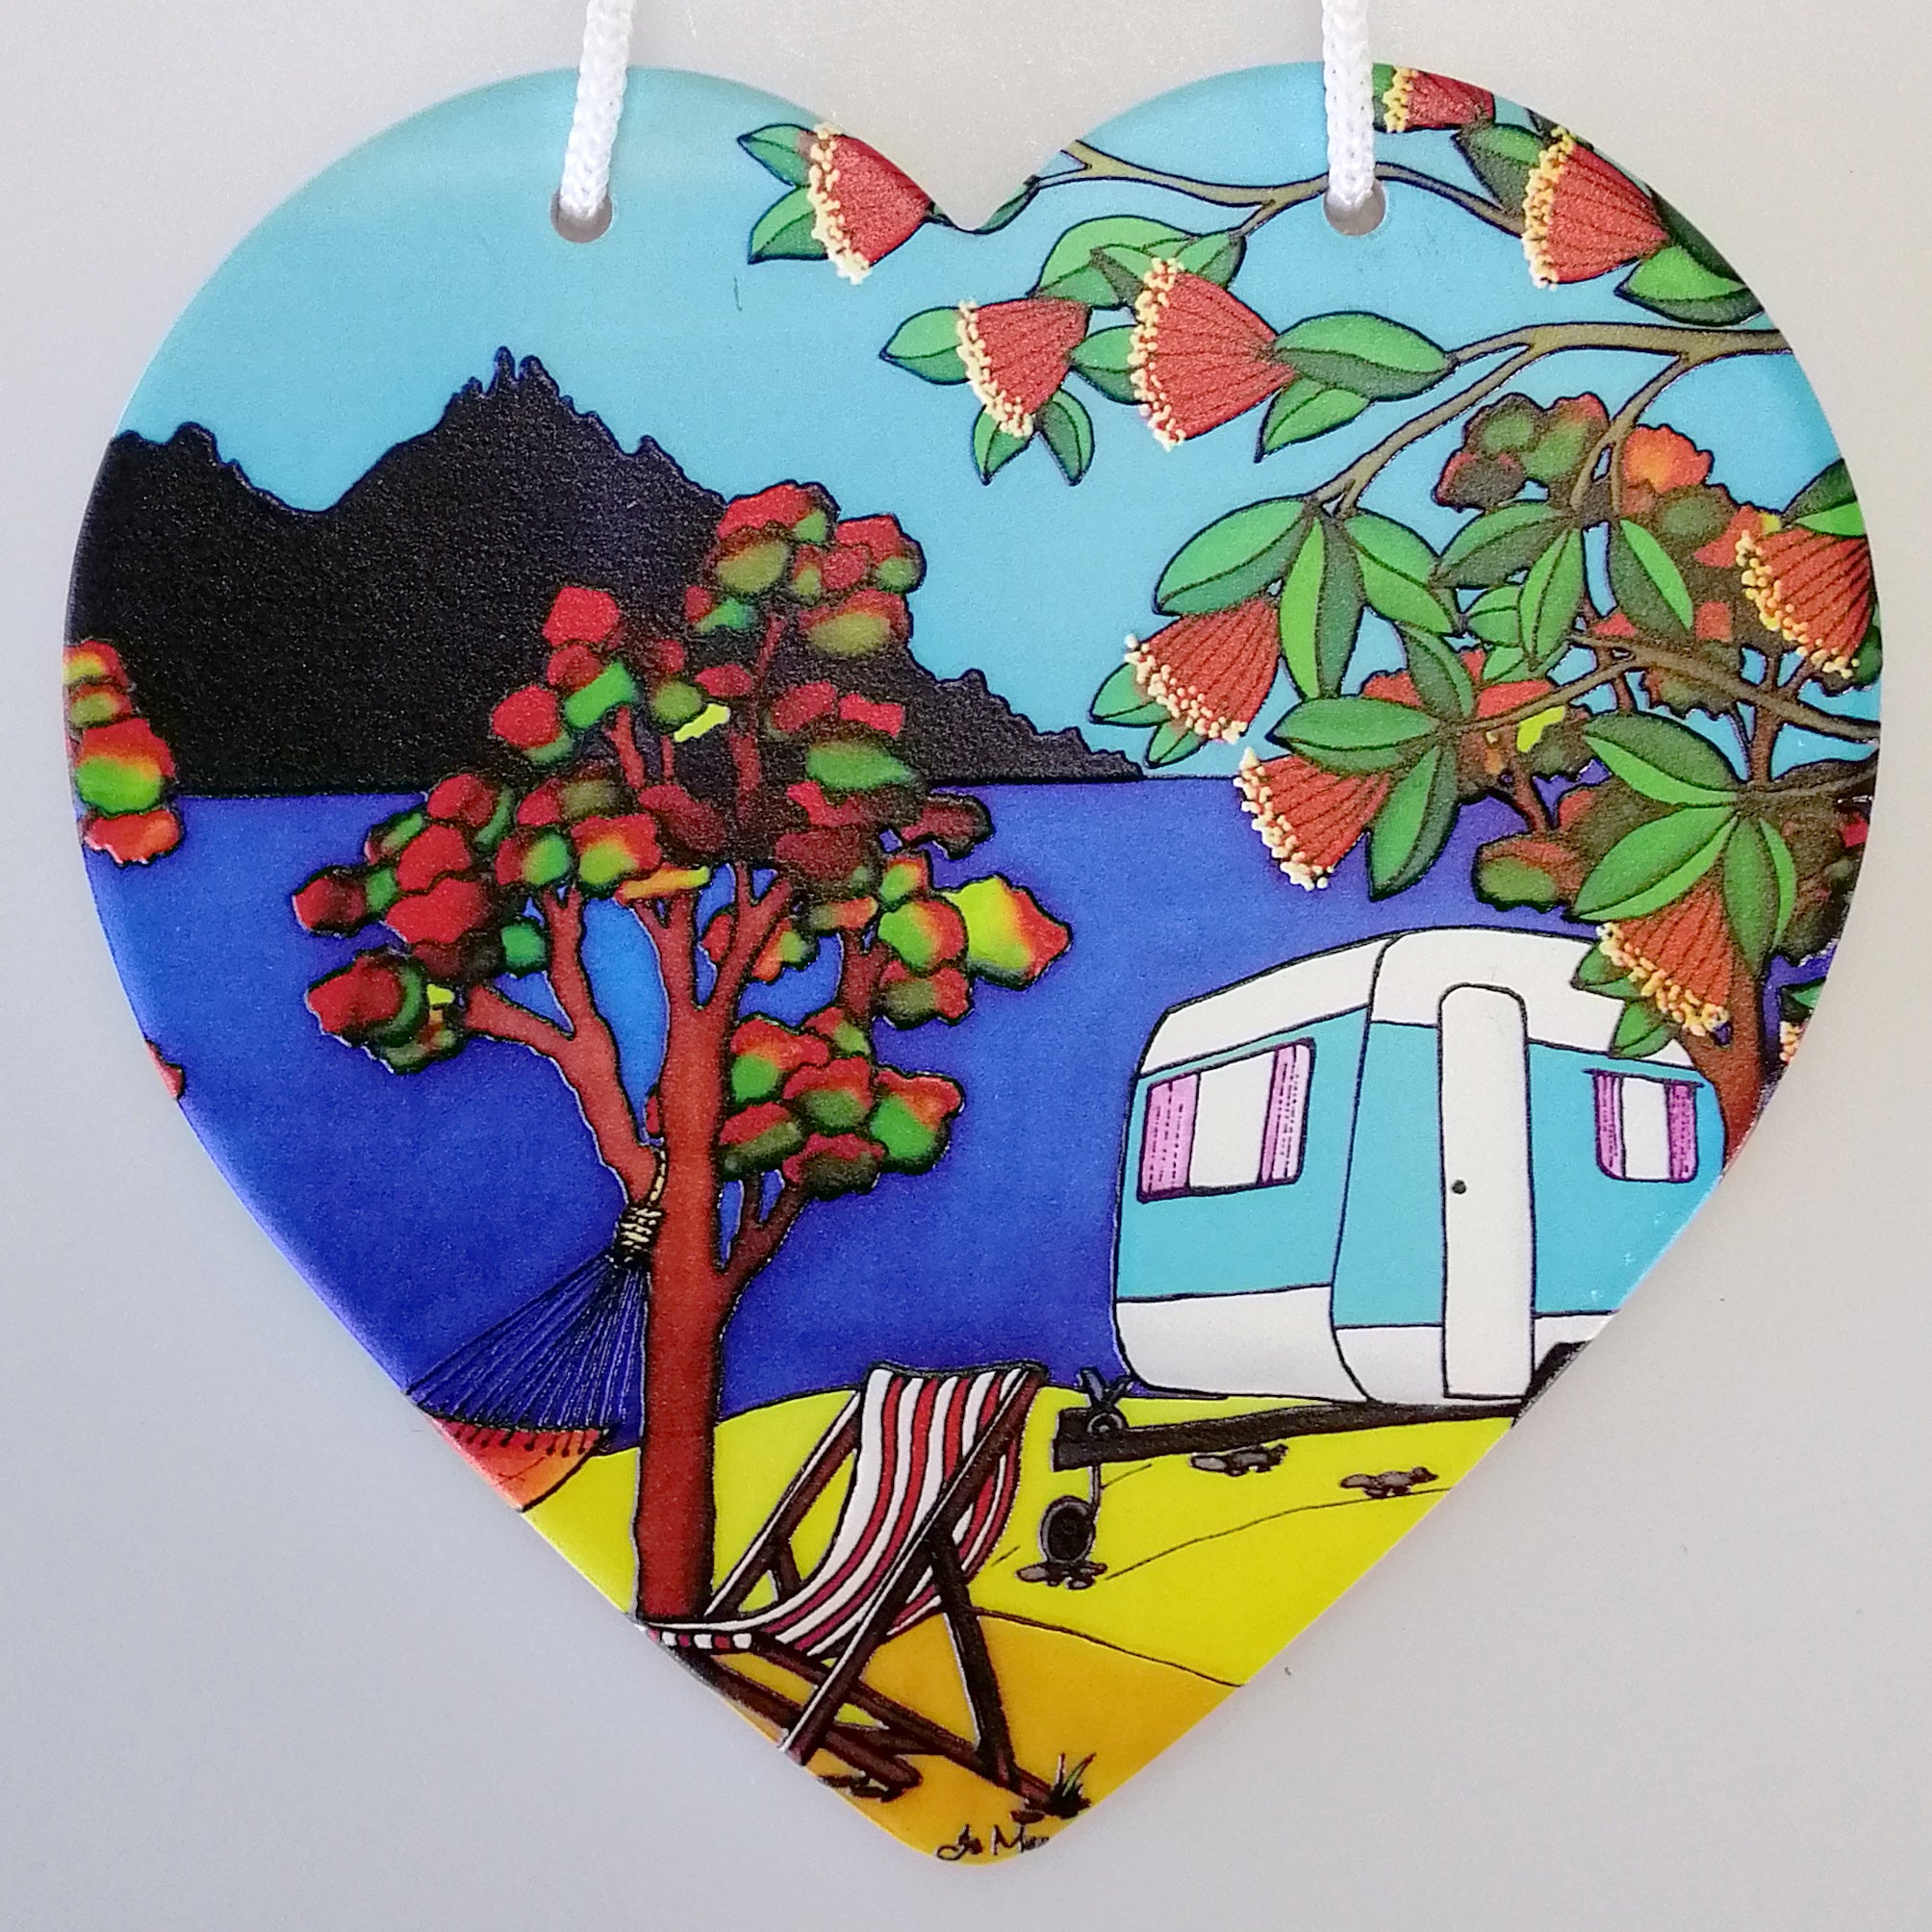 Jo May - Caravan Ceramic Heart Wall Hanging